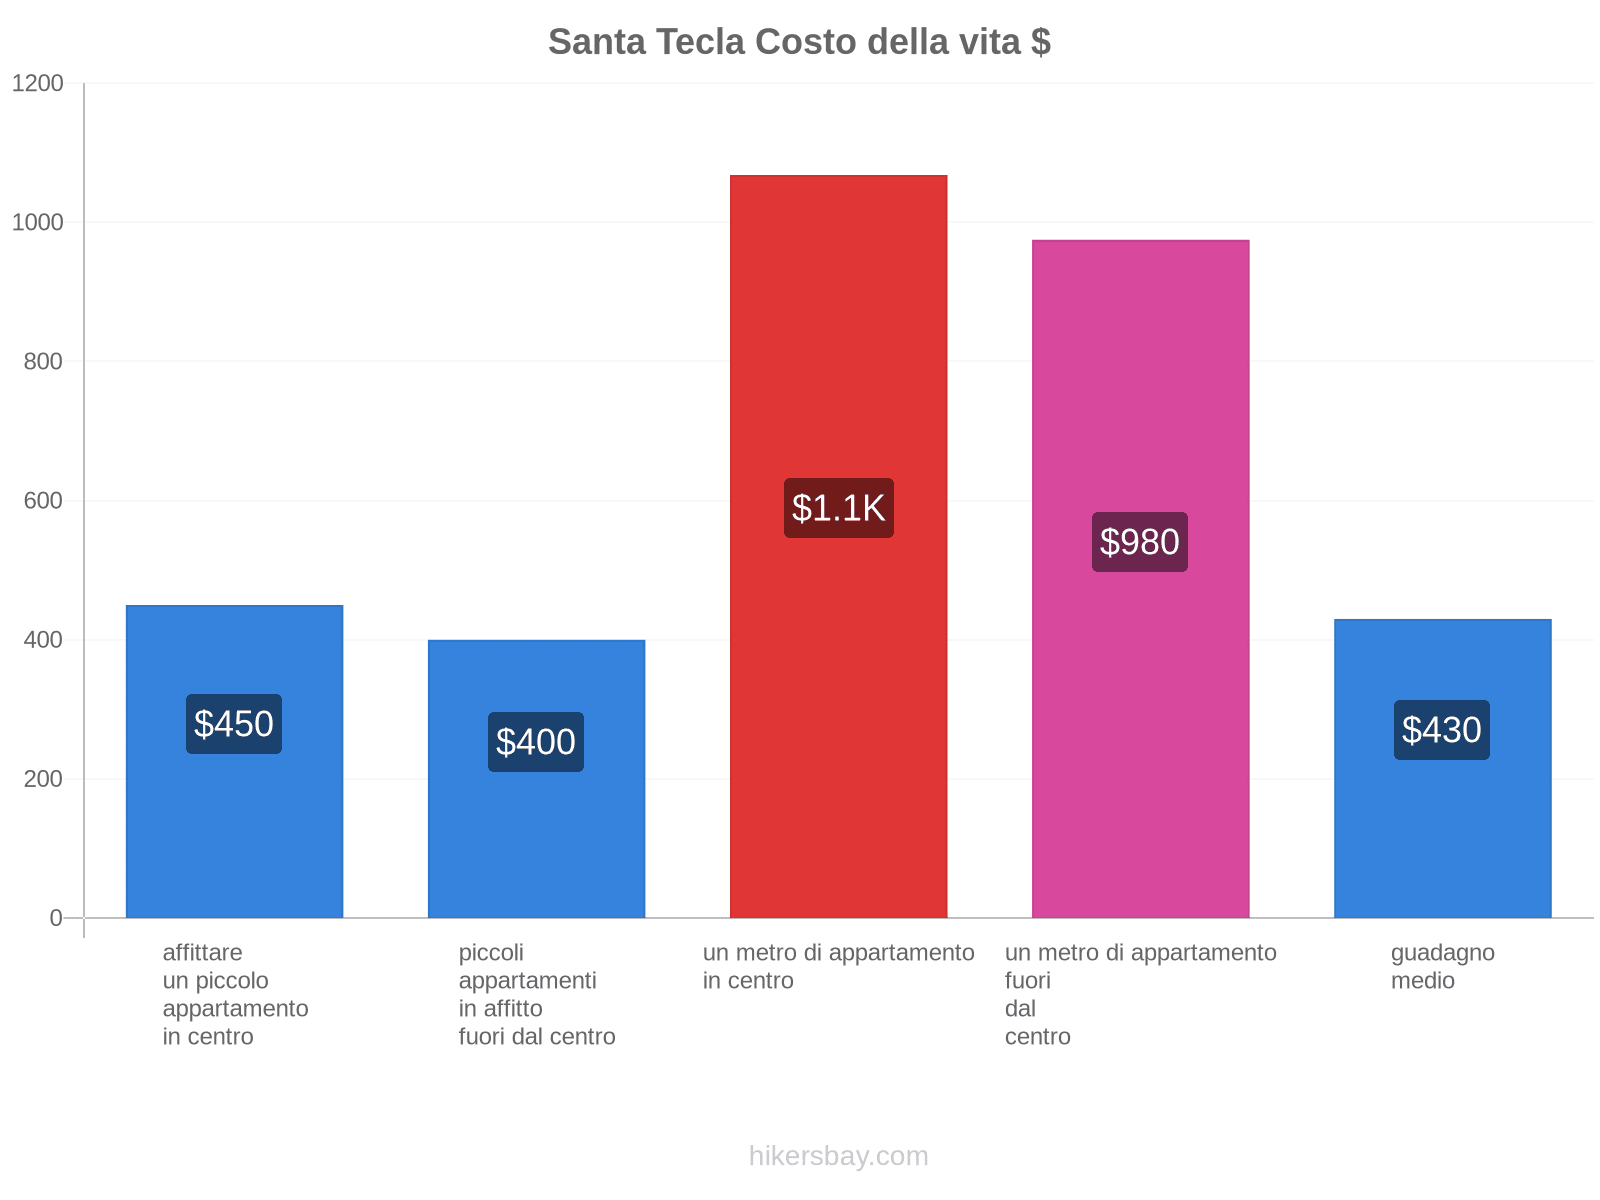 Santa Tecla costo della vita hikersbay.com